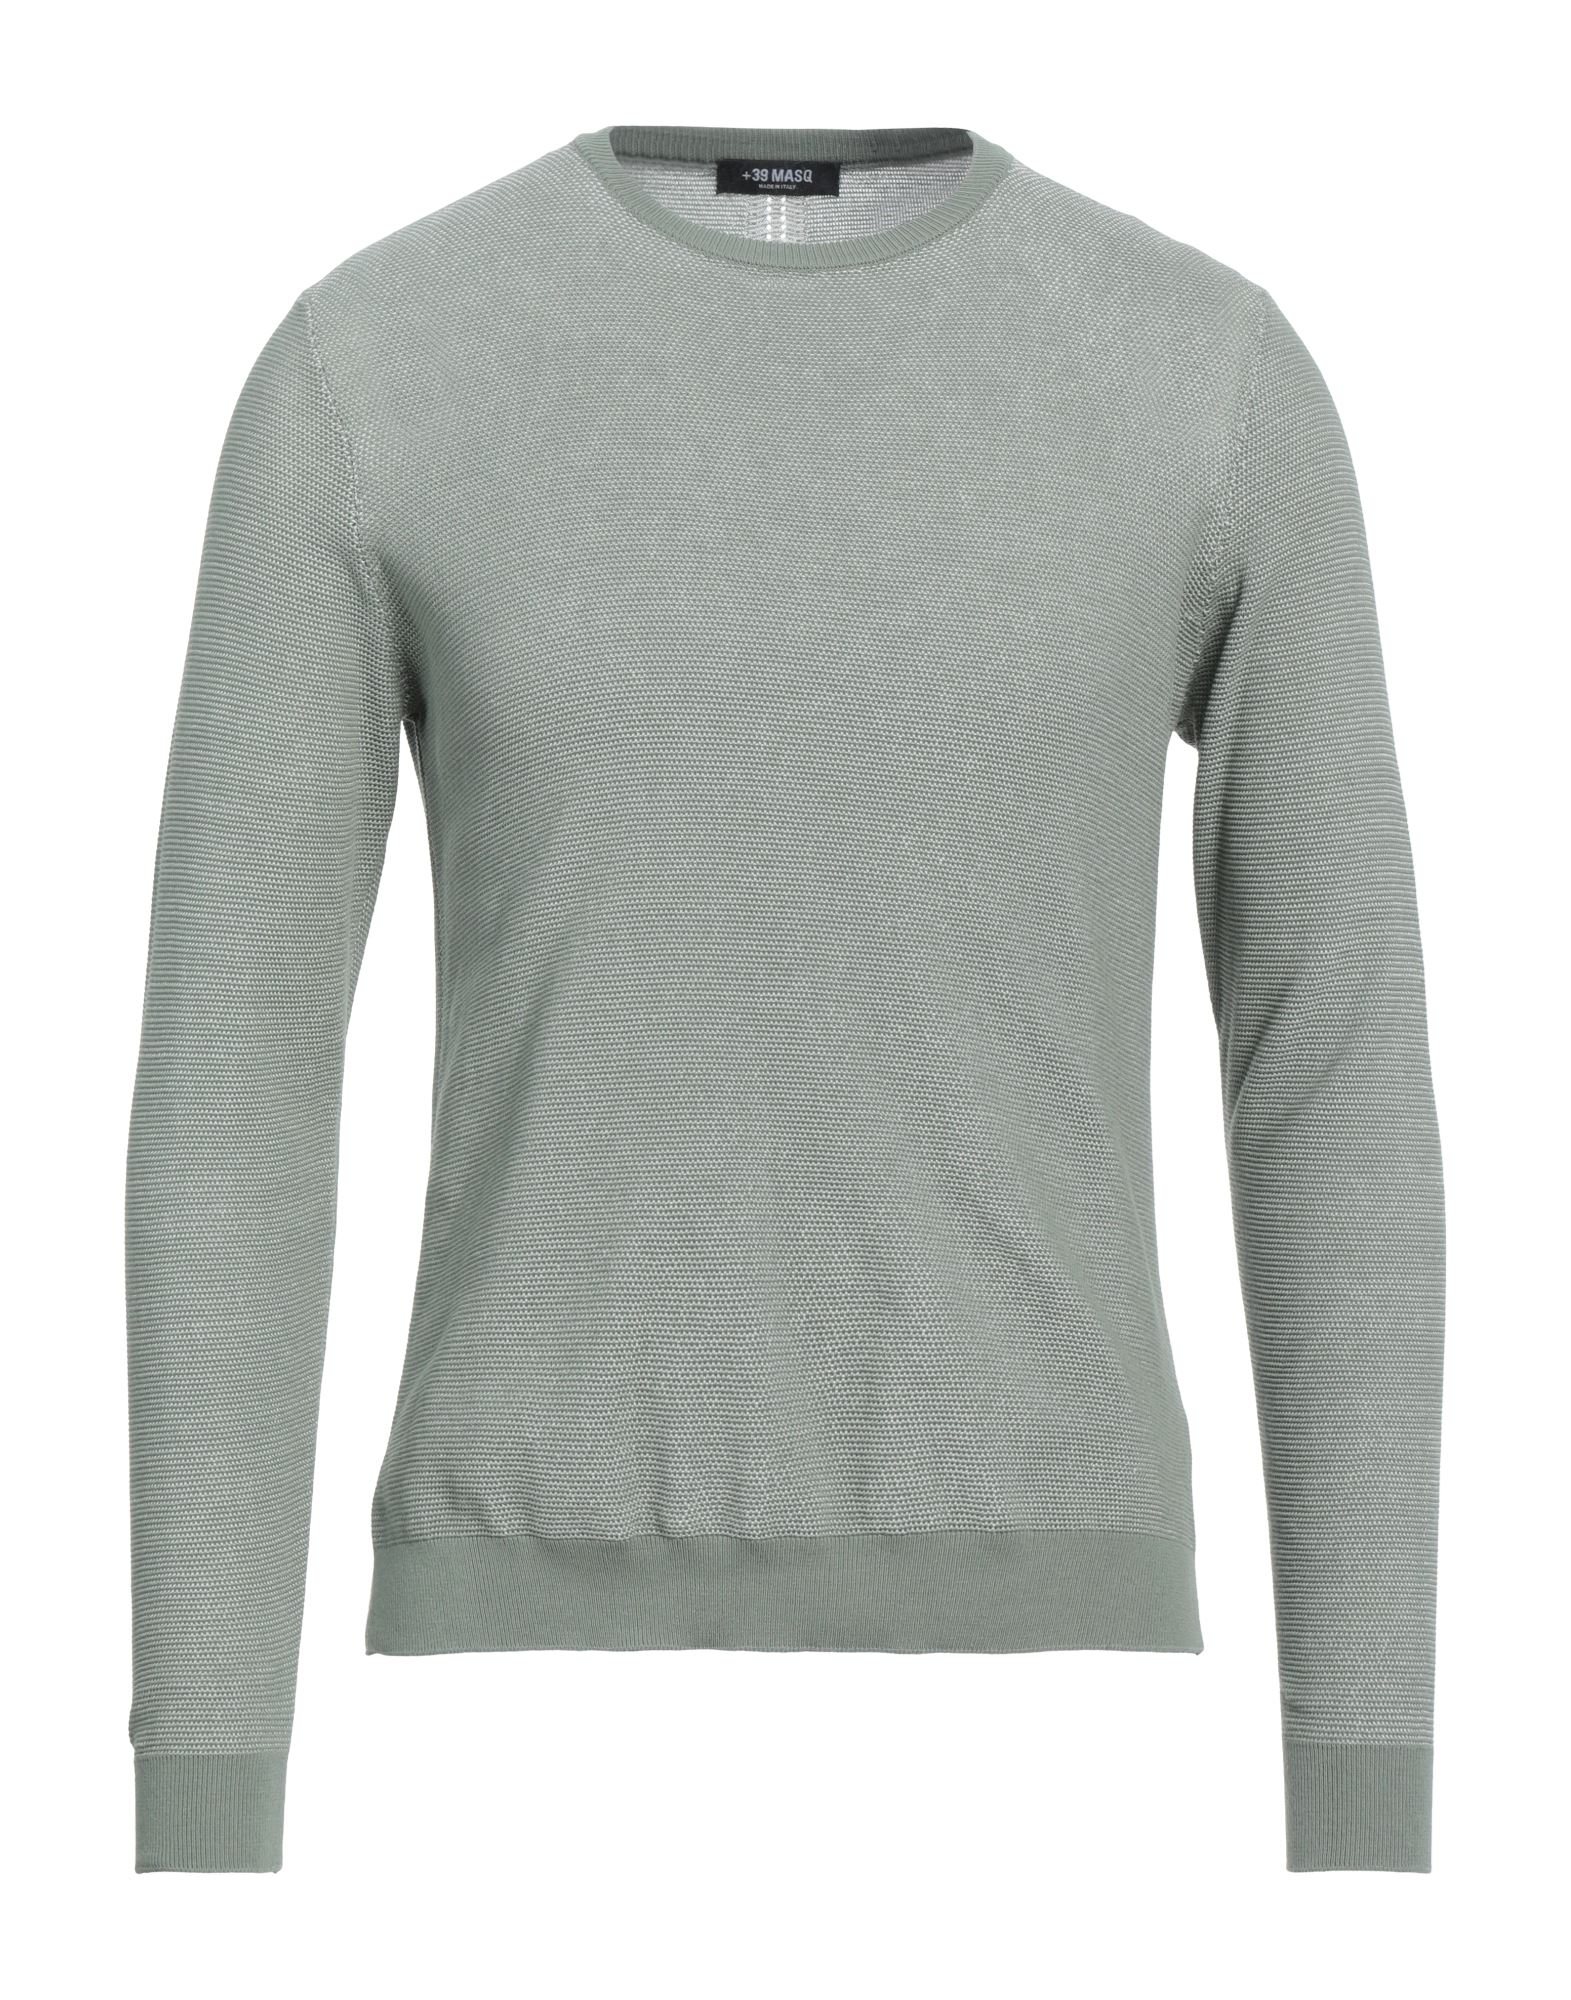 +39 Masq Man Sweater Sage Green Size S Cotton